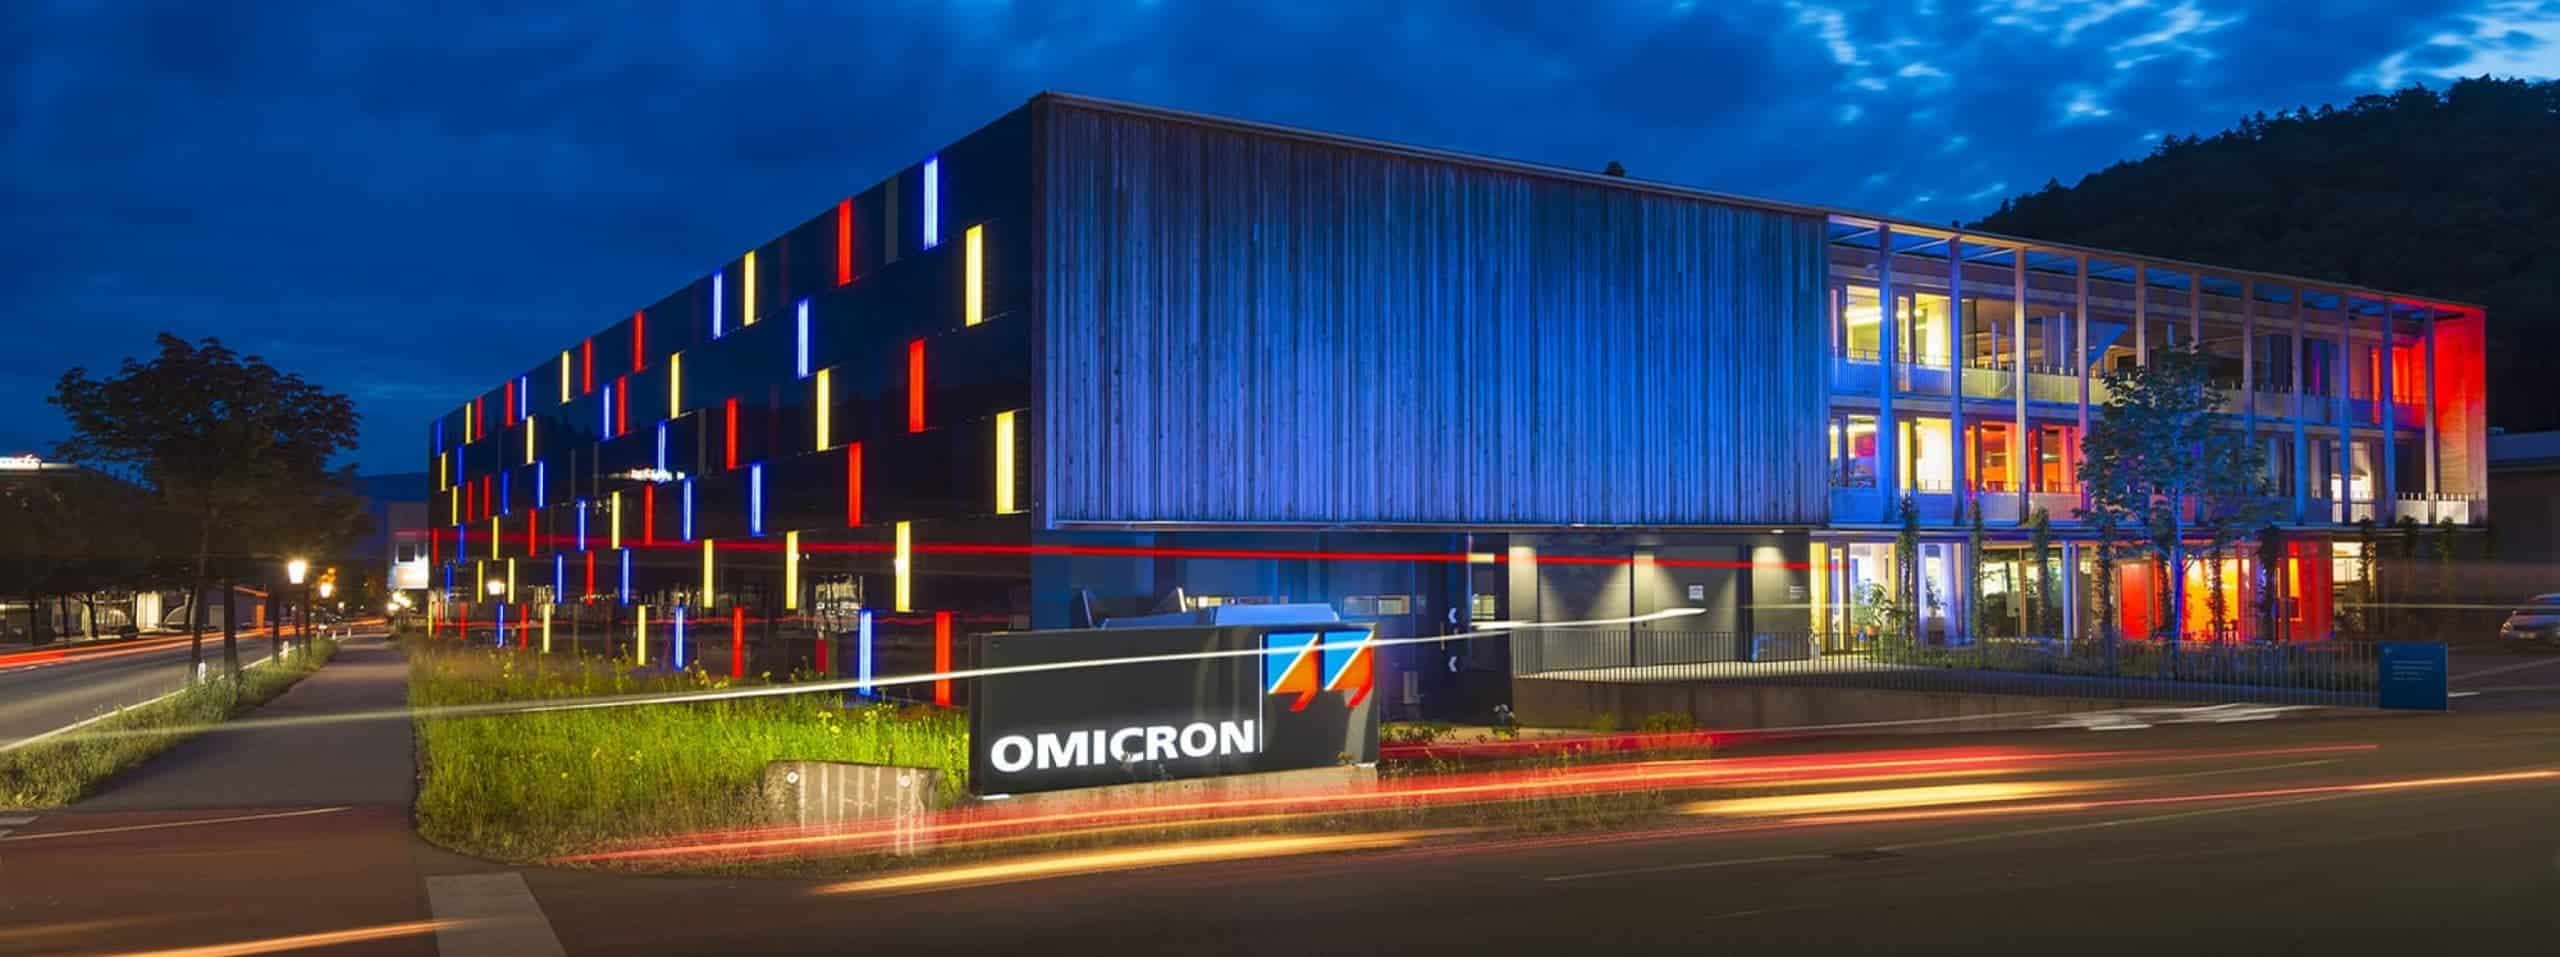 omicron-headerbild